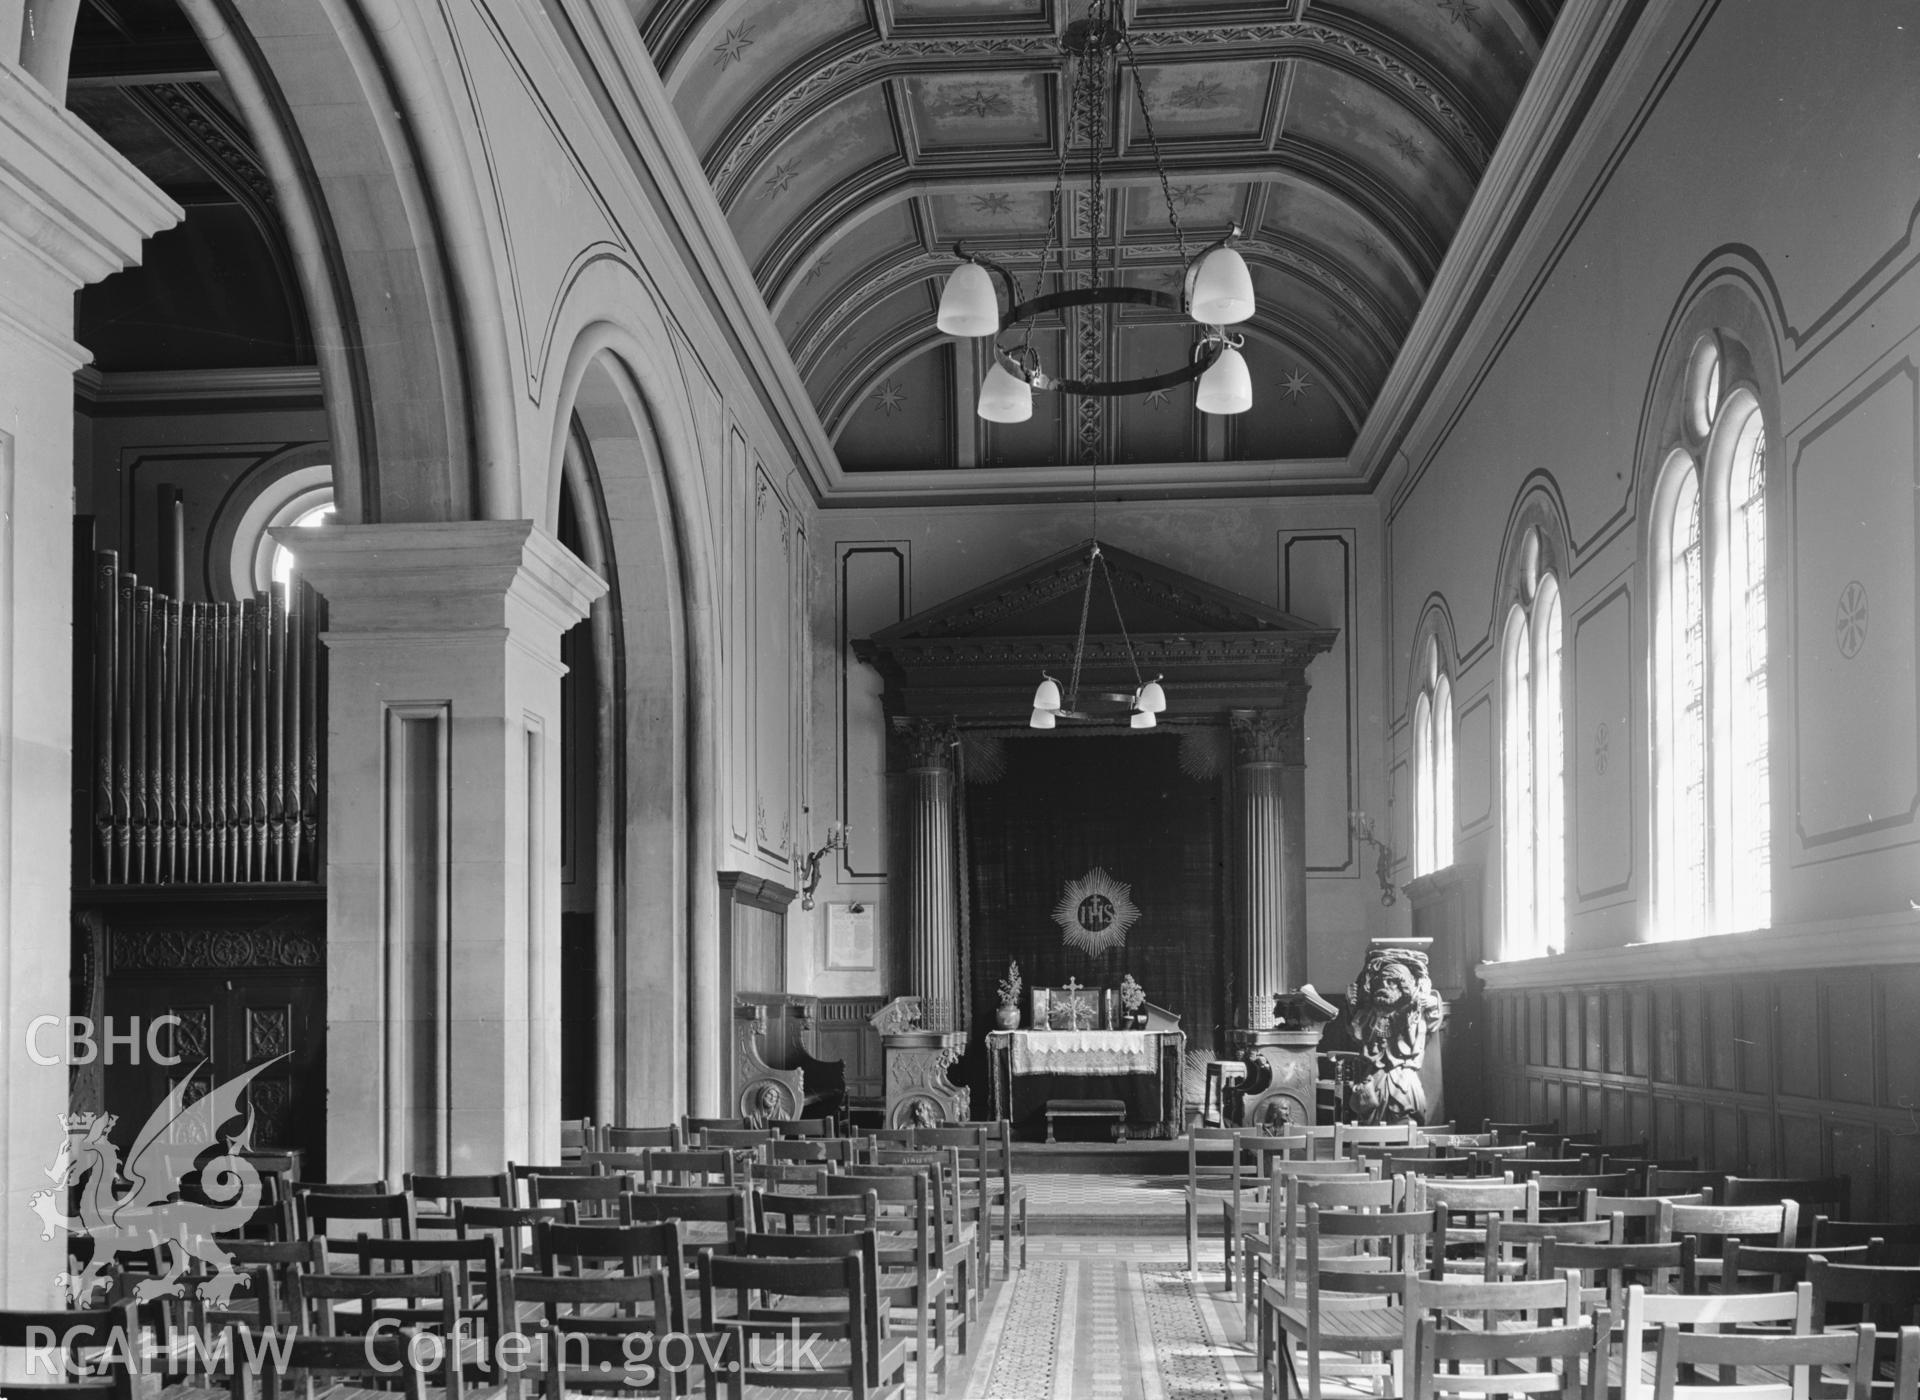 Chapel interior - looking E